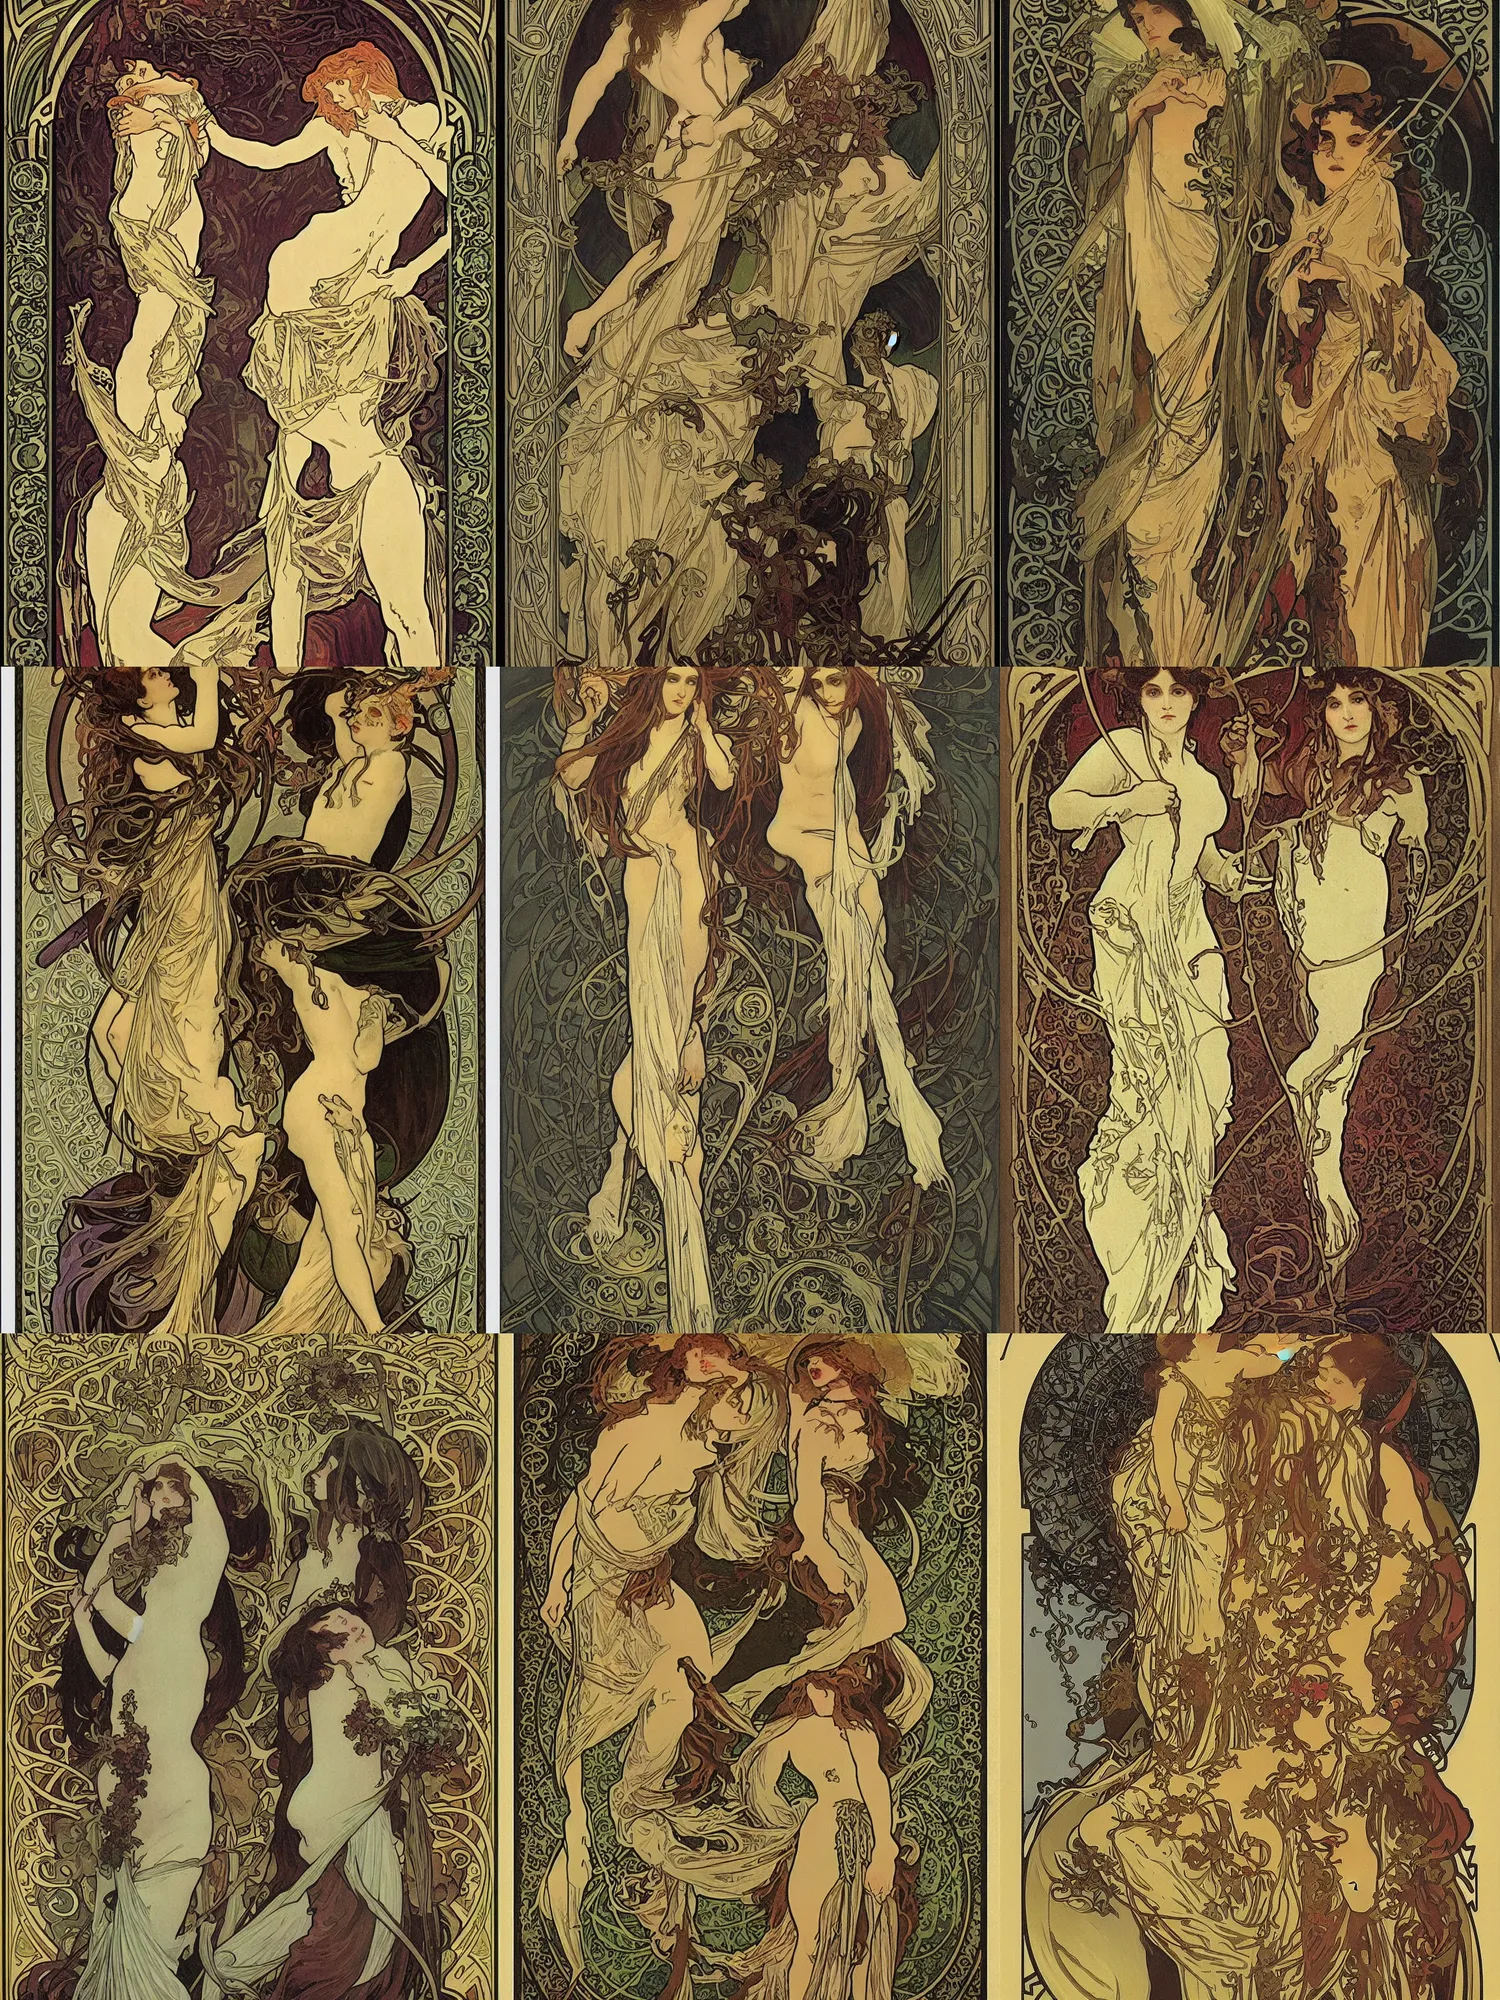 Prompt: Tarot death arcane card, by Alphonse Mucha, art nouveau